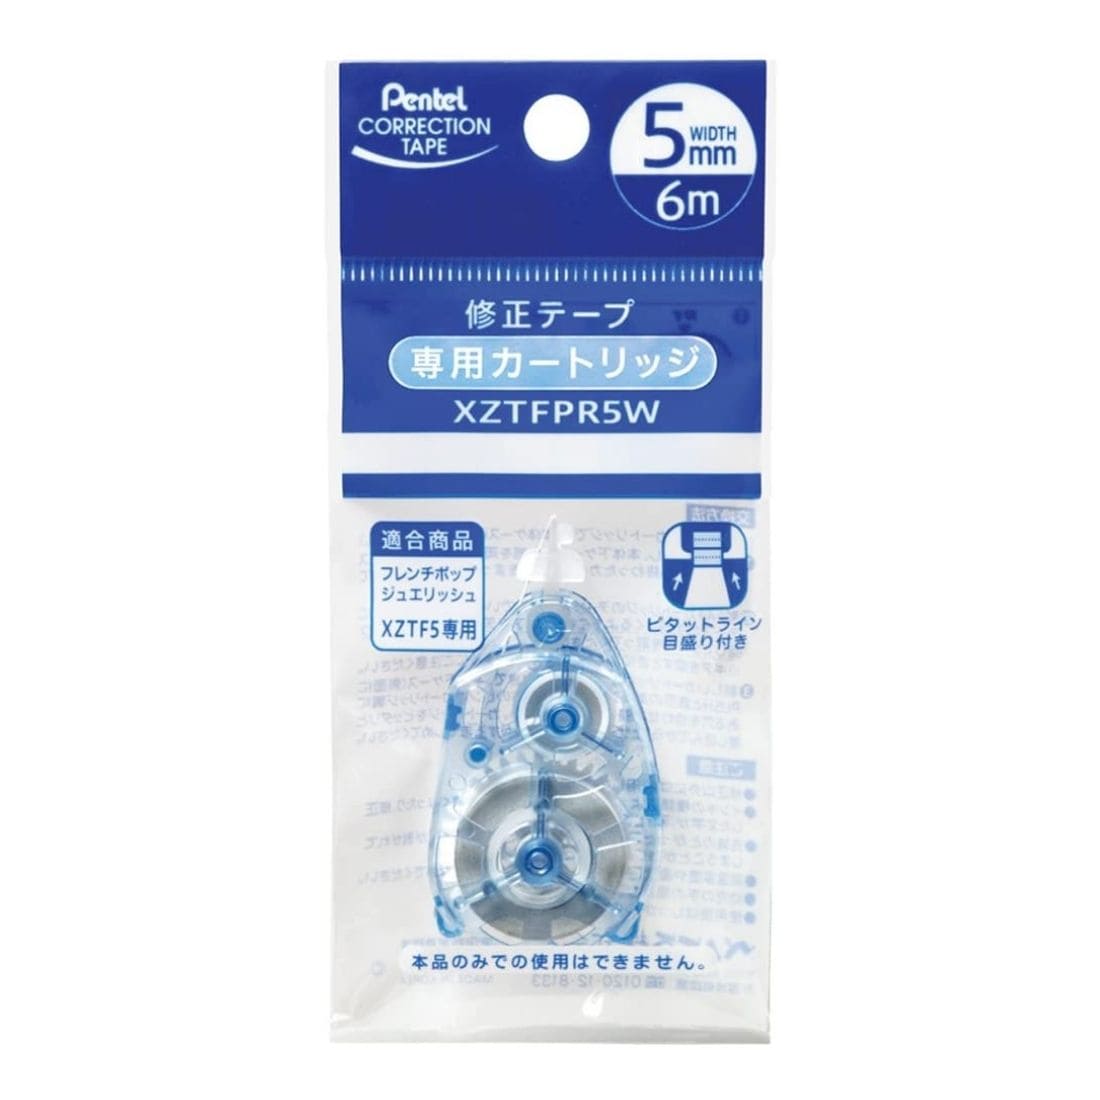 Pentel refillable French Pop Correction Tape Refill Cartridge XZTFPR5W - Paper Kooka